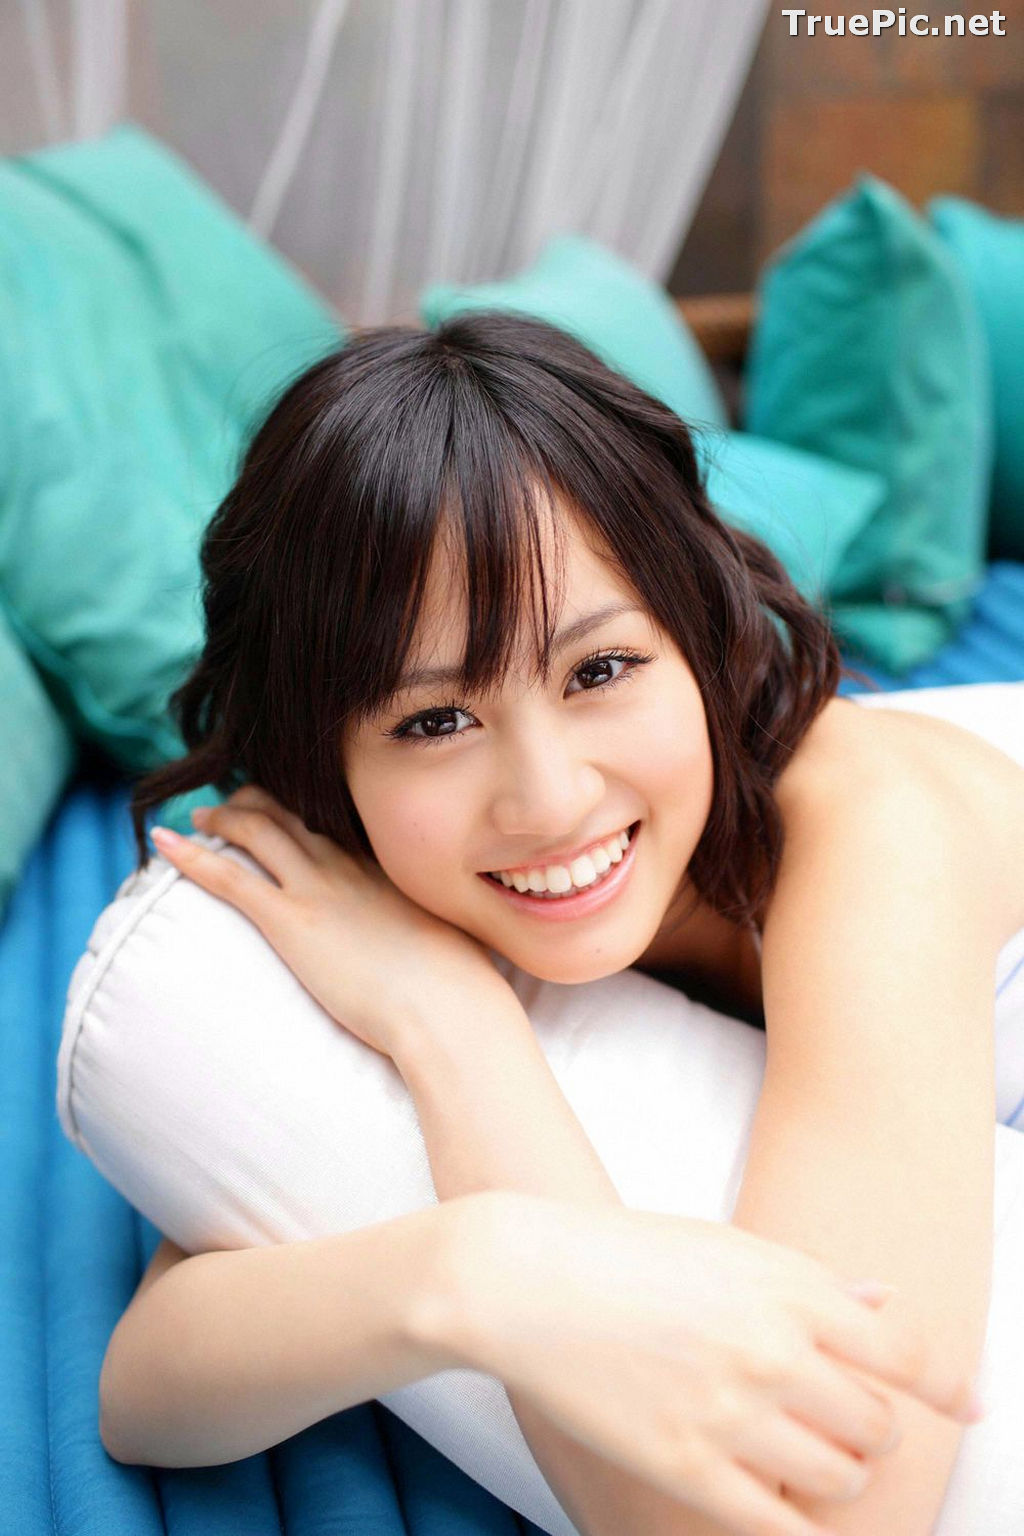 Image [YS Web] Vol.330 - Japanese Actress and Singer - Maeda Atsuko - TruePic.net - Picture-45